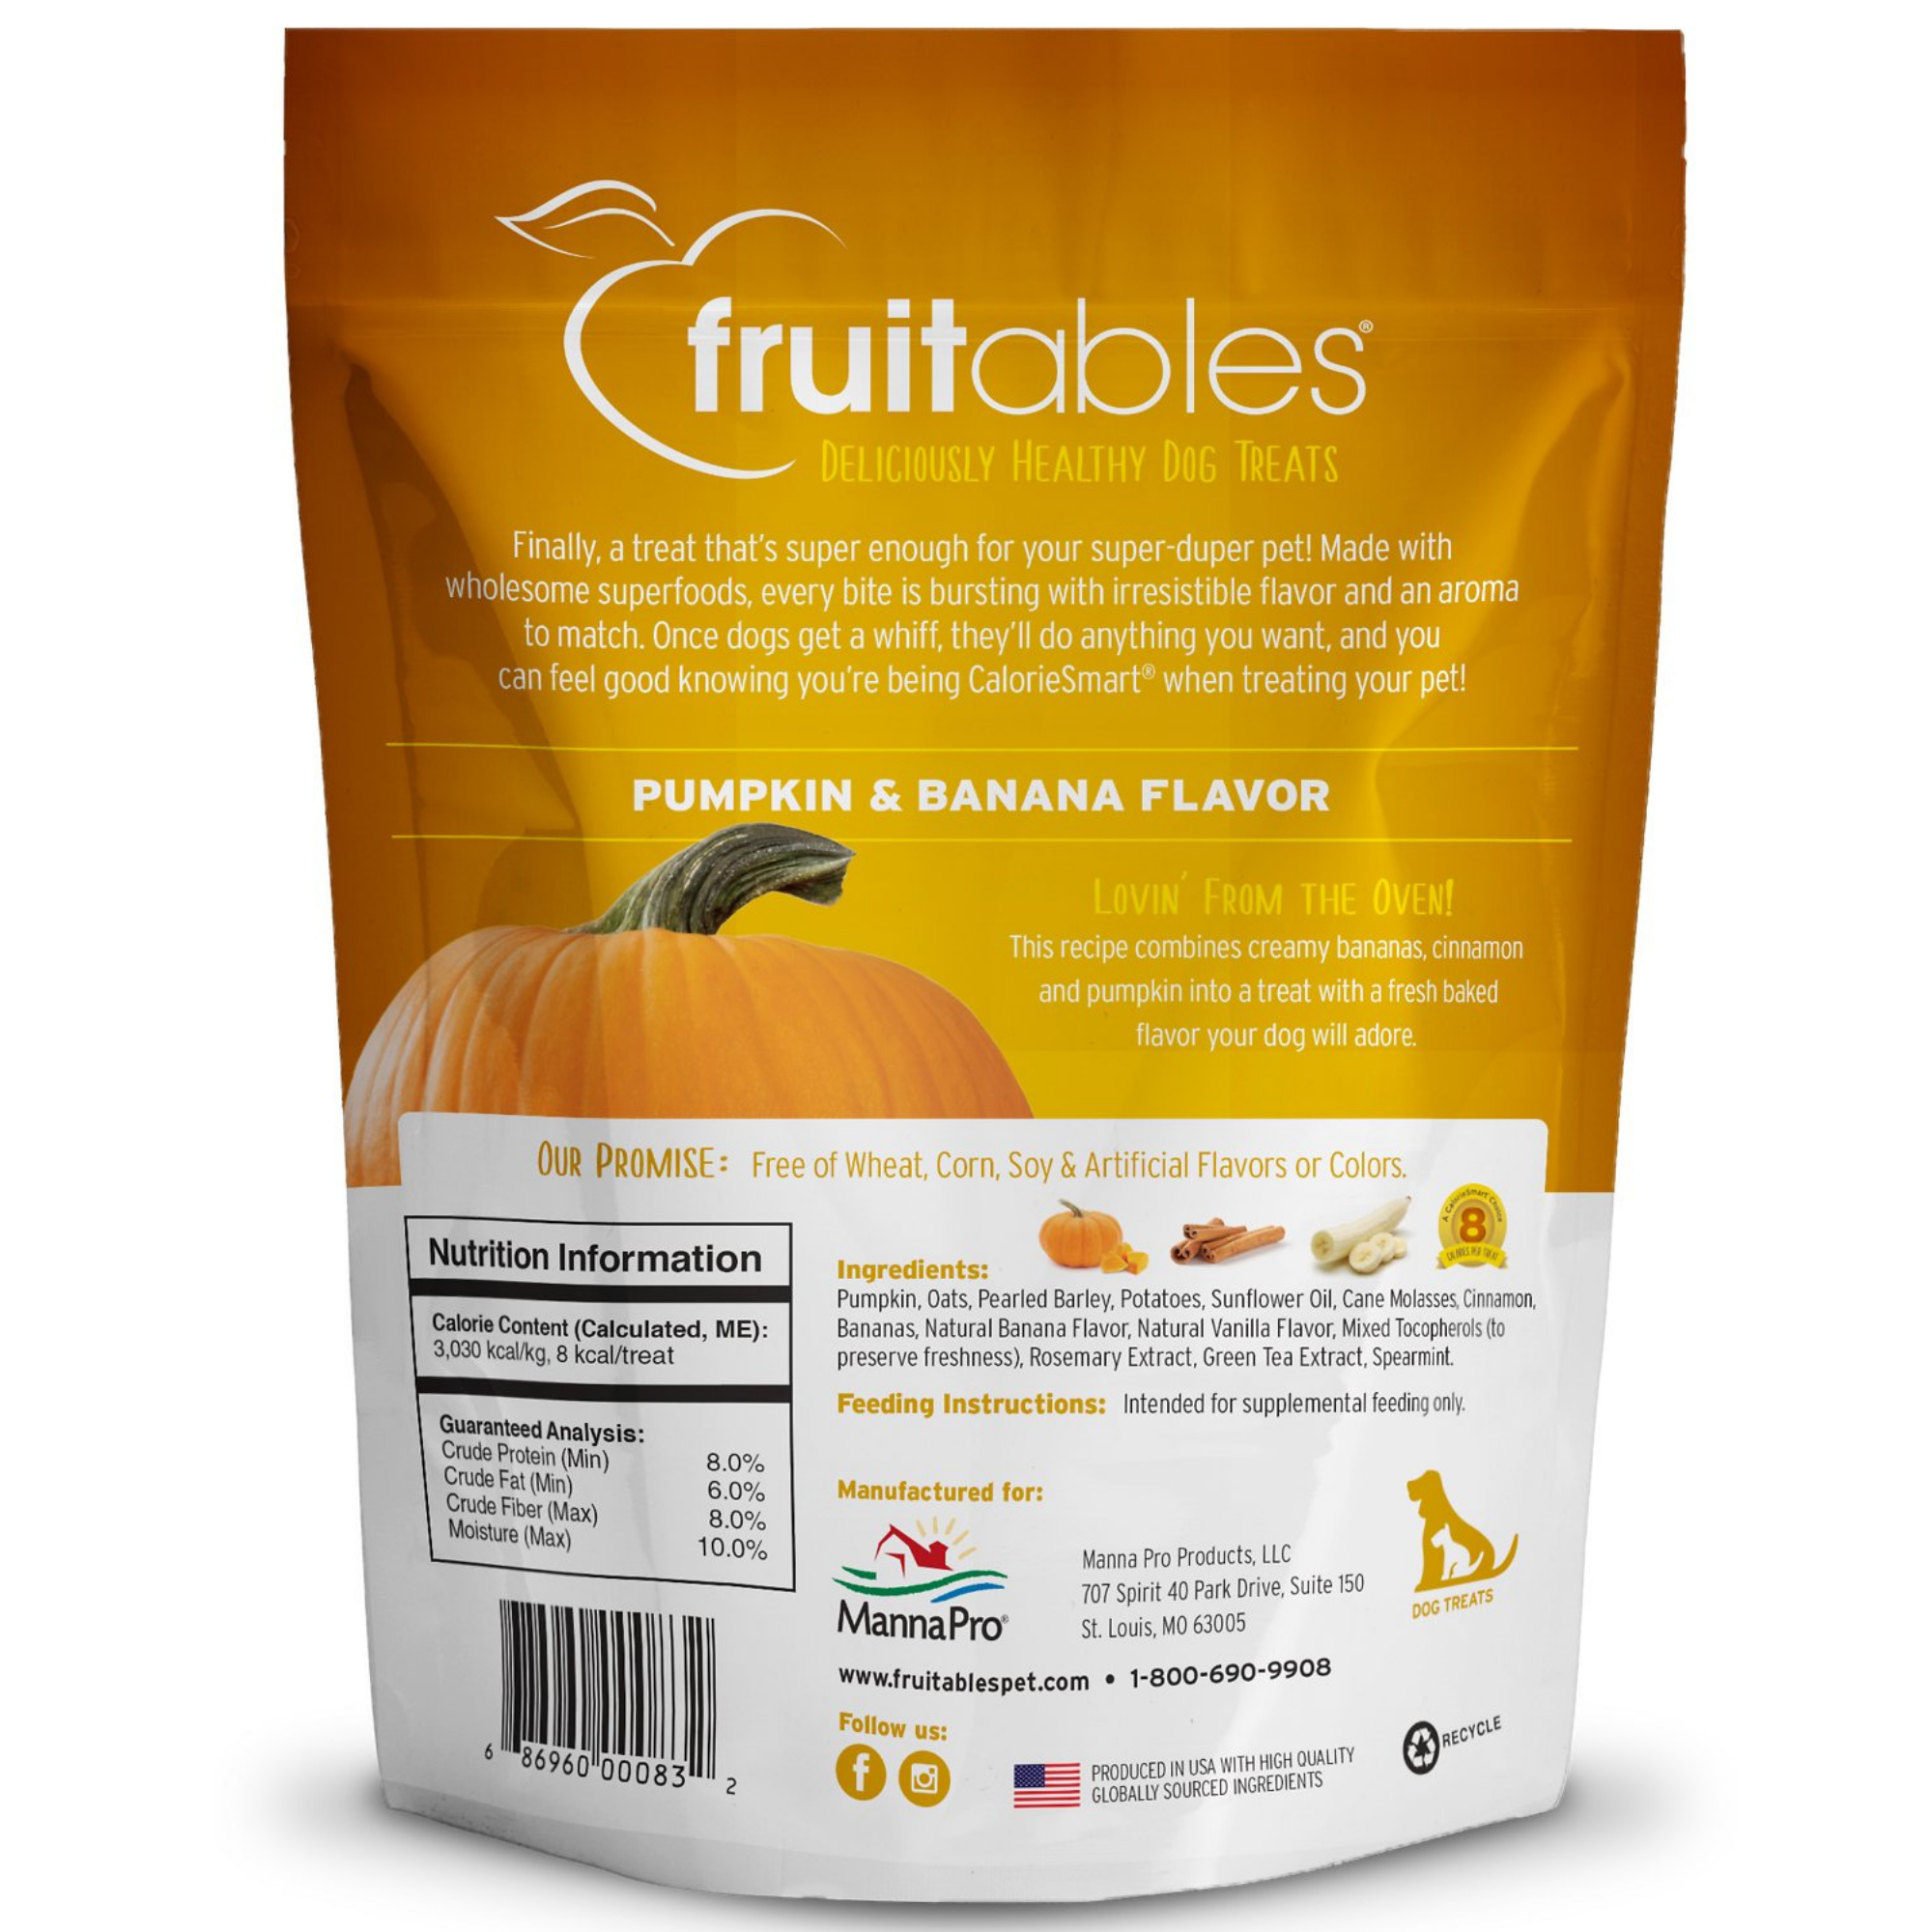 Fruitables Pumpkin & Banana Flavor Crunchy Dog Treats 7oz - Mutts & Co.